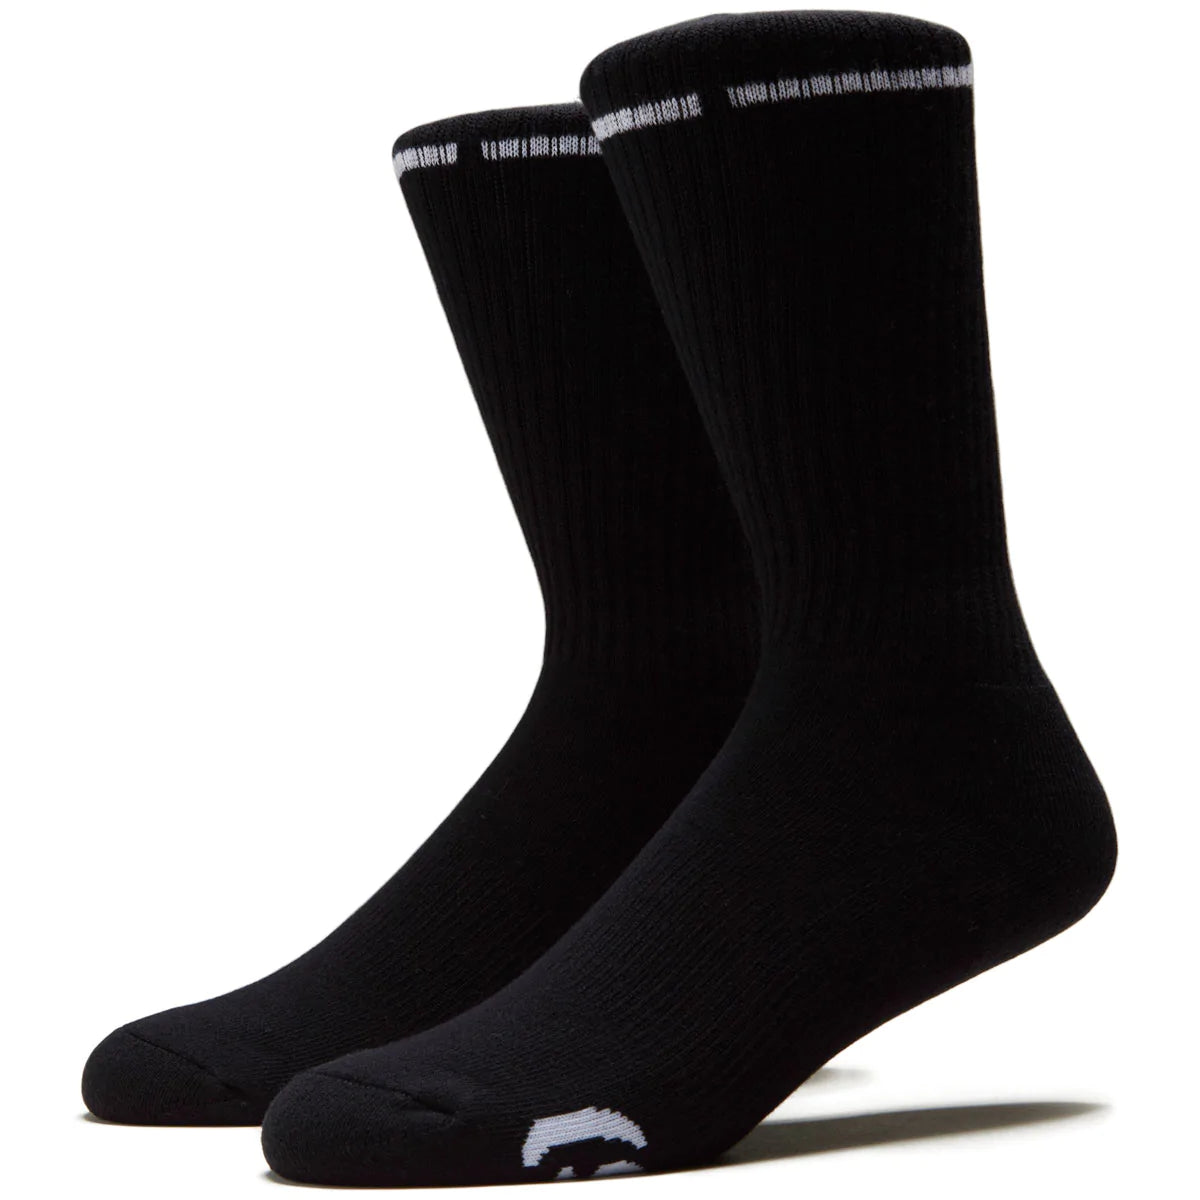 CCS Primary Socks - Black/White image 1